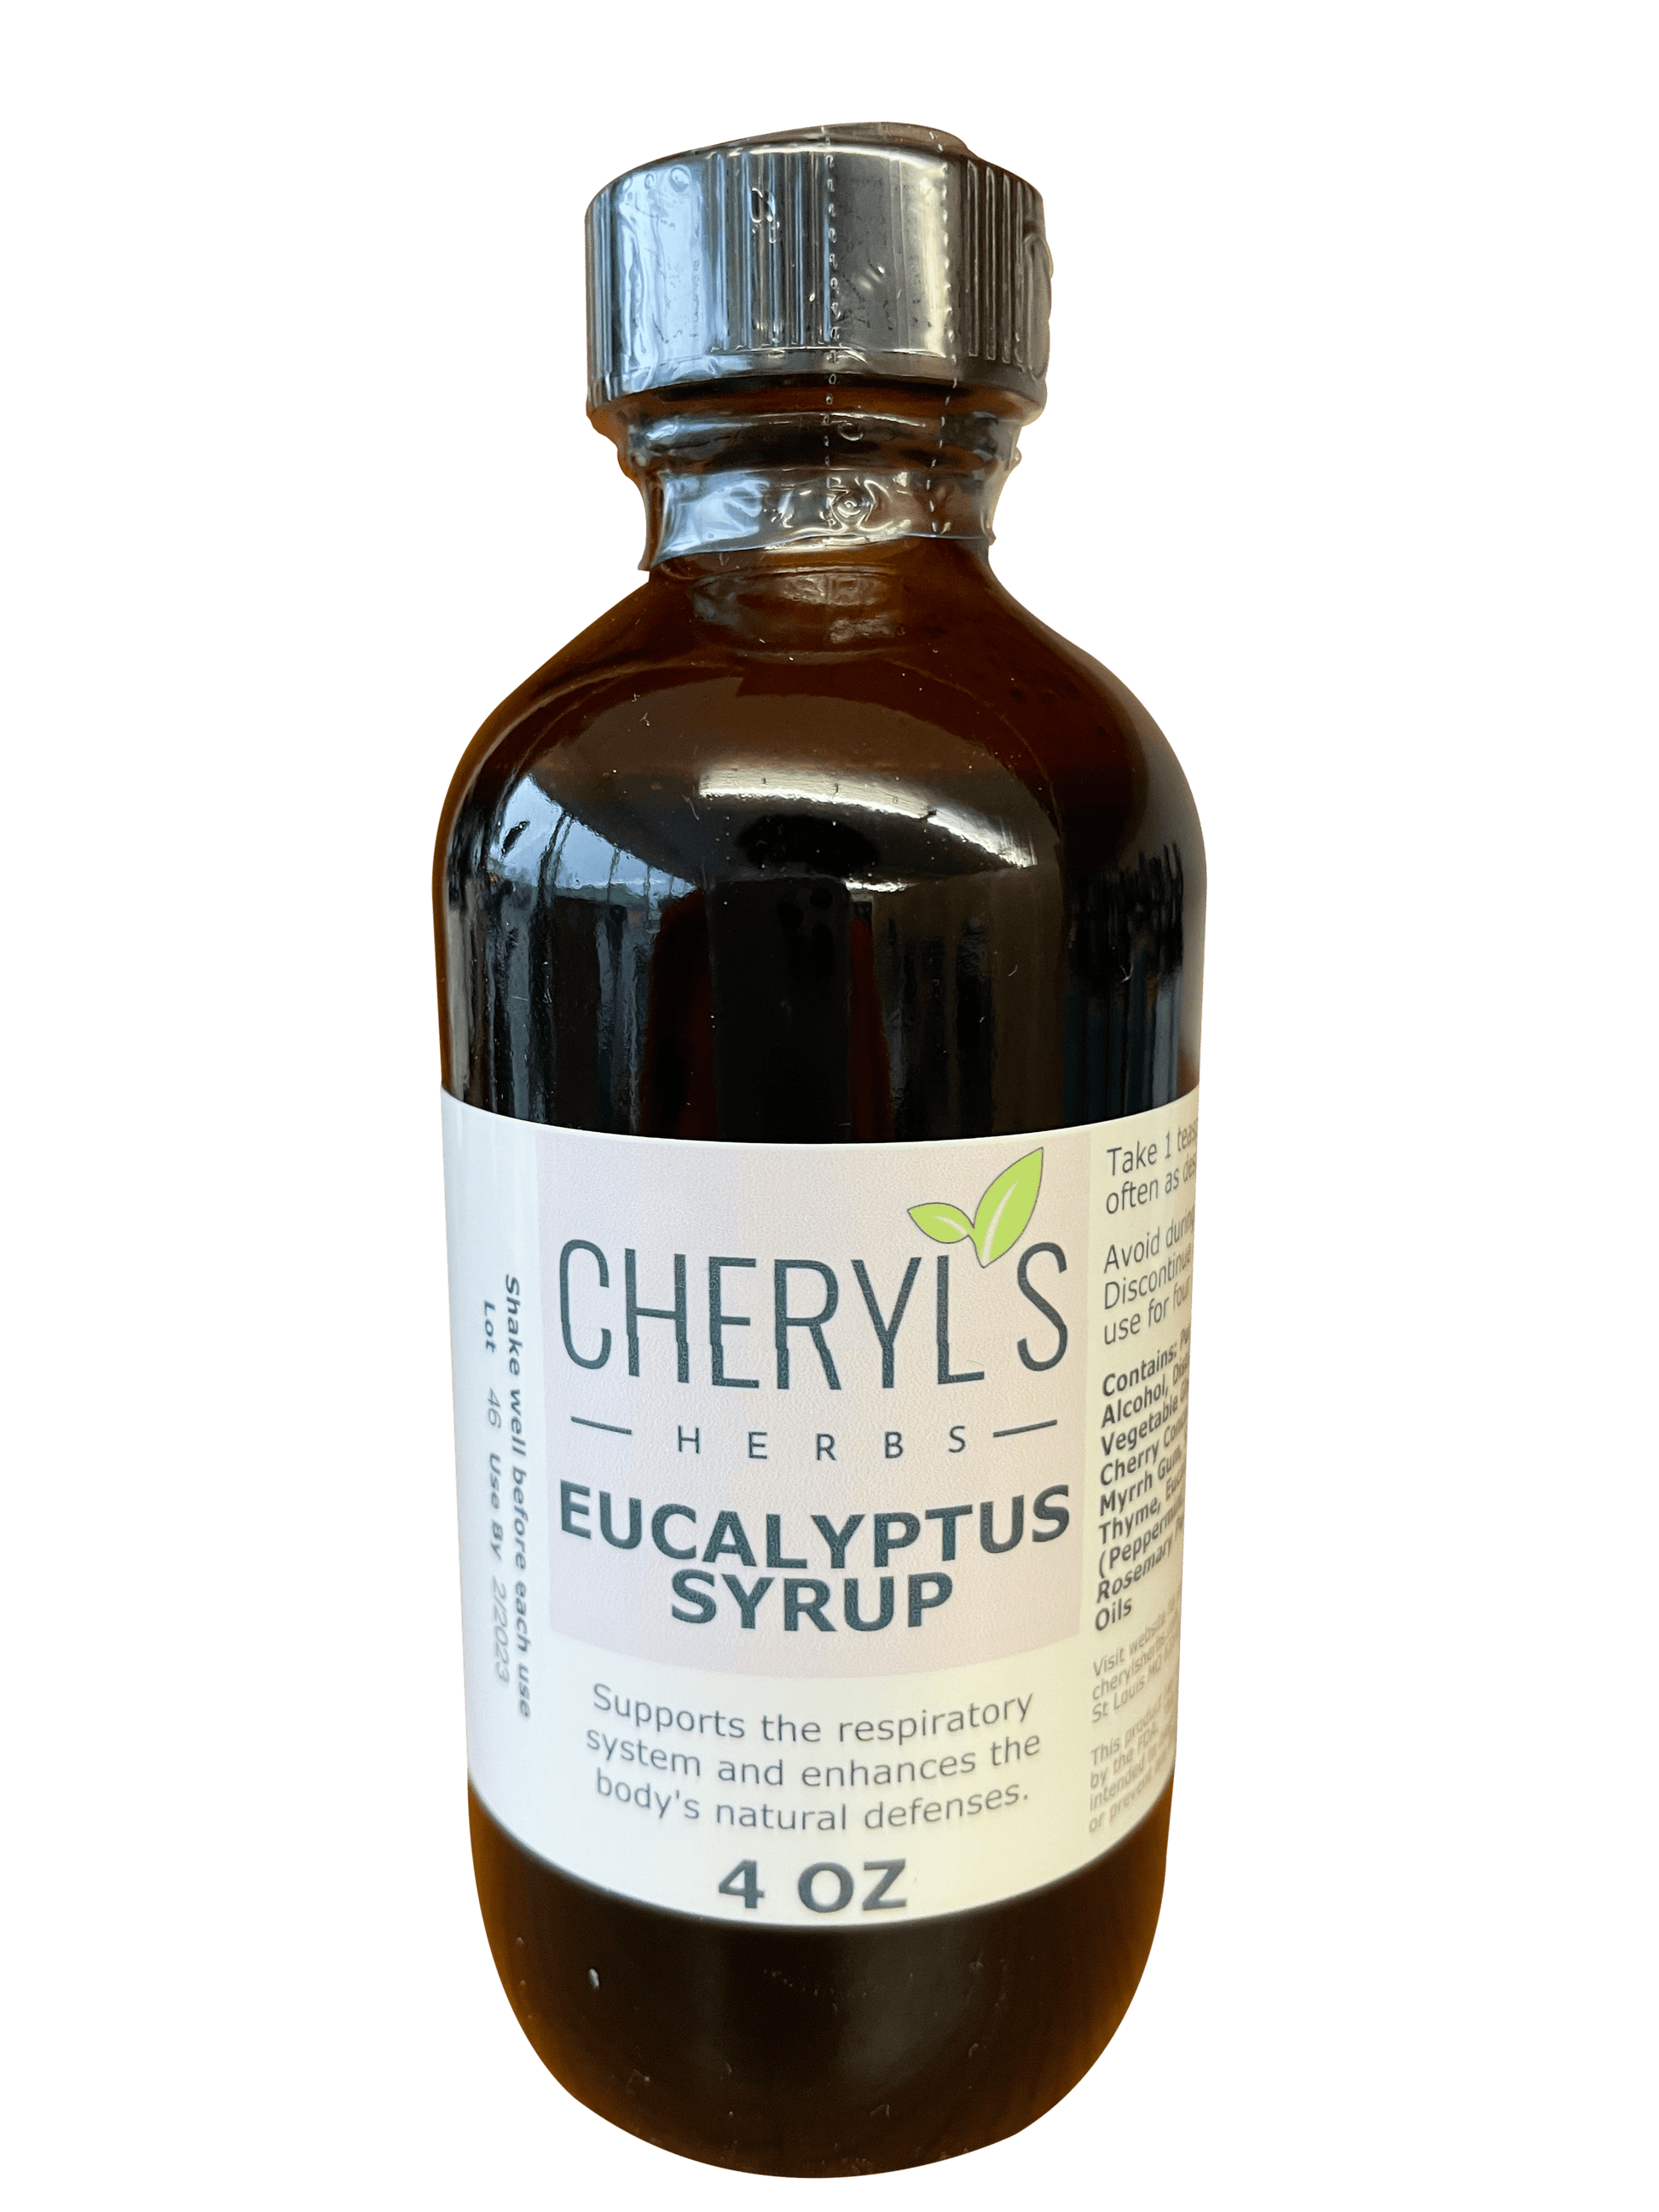 EUCALYPTUS SYRUP - Cheryls Herbs